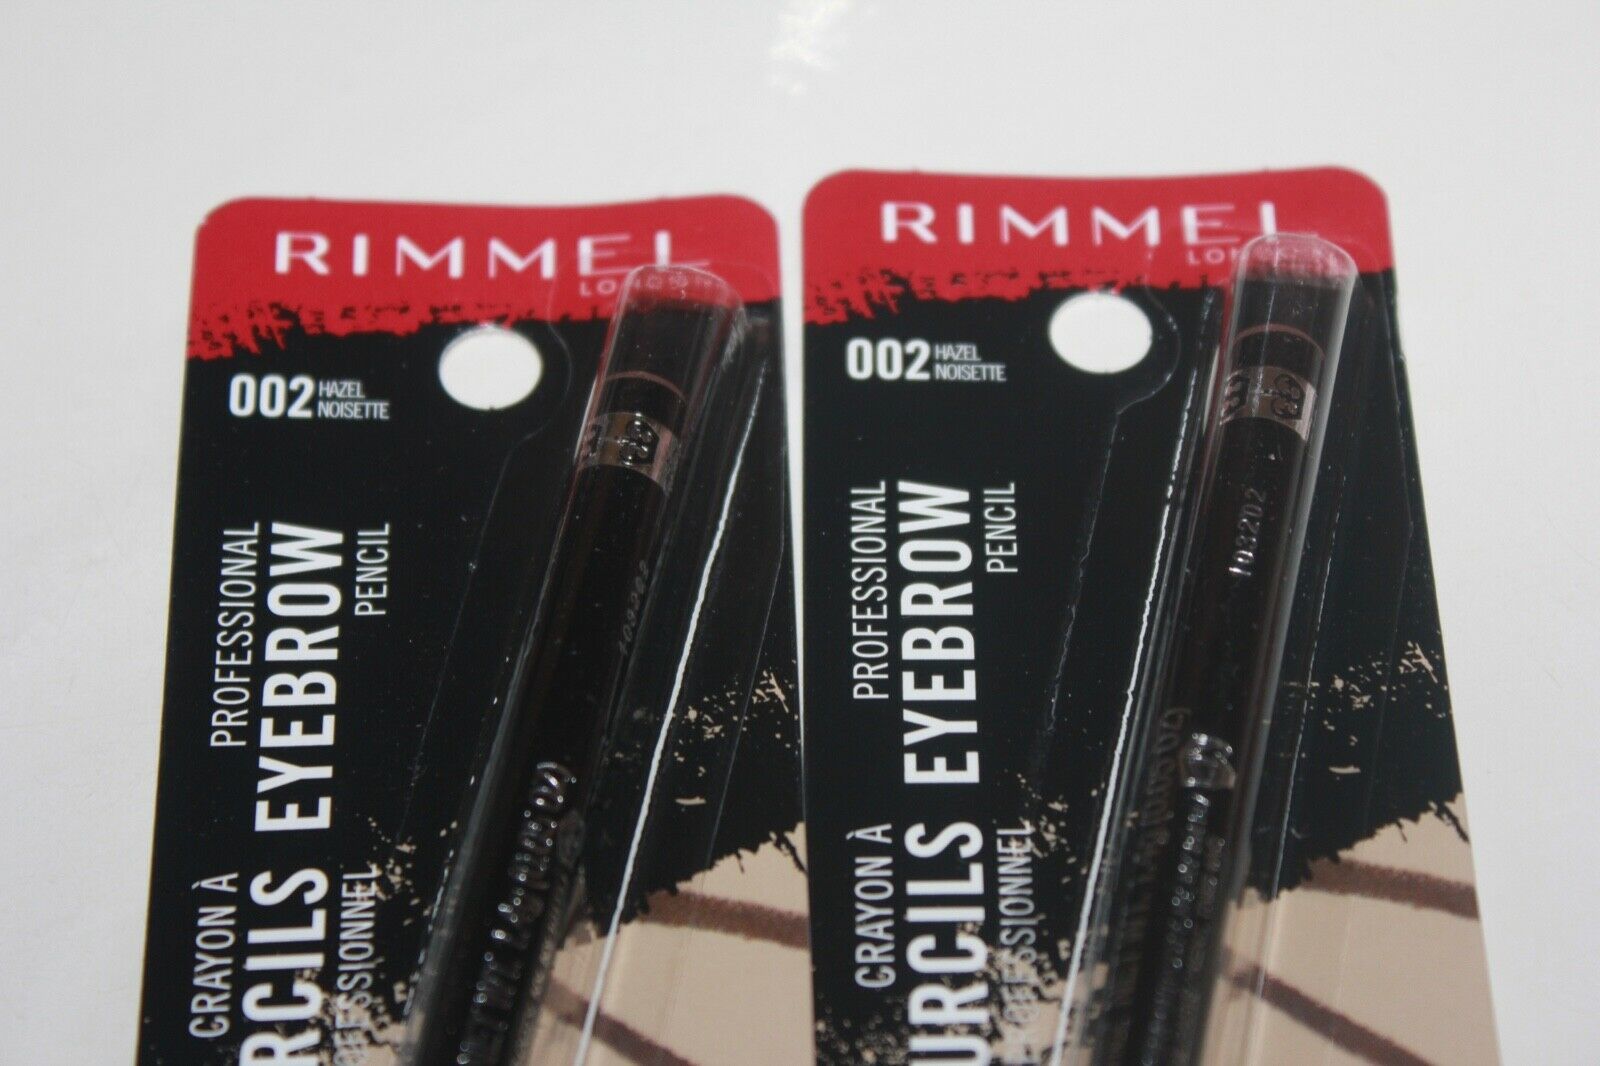 Rimmel Professional Eyebrow Pencil Brush 002 Hazel Shape Define LOT OF 2 - $11.99